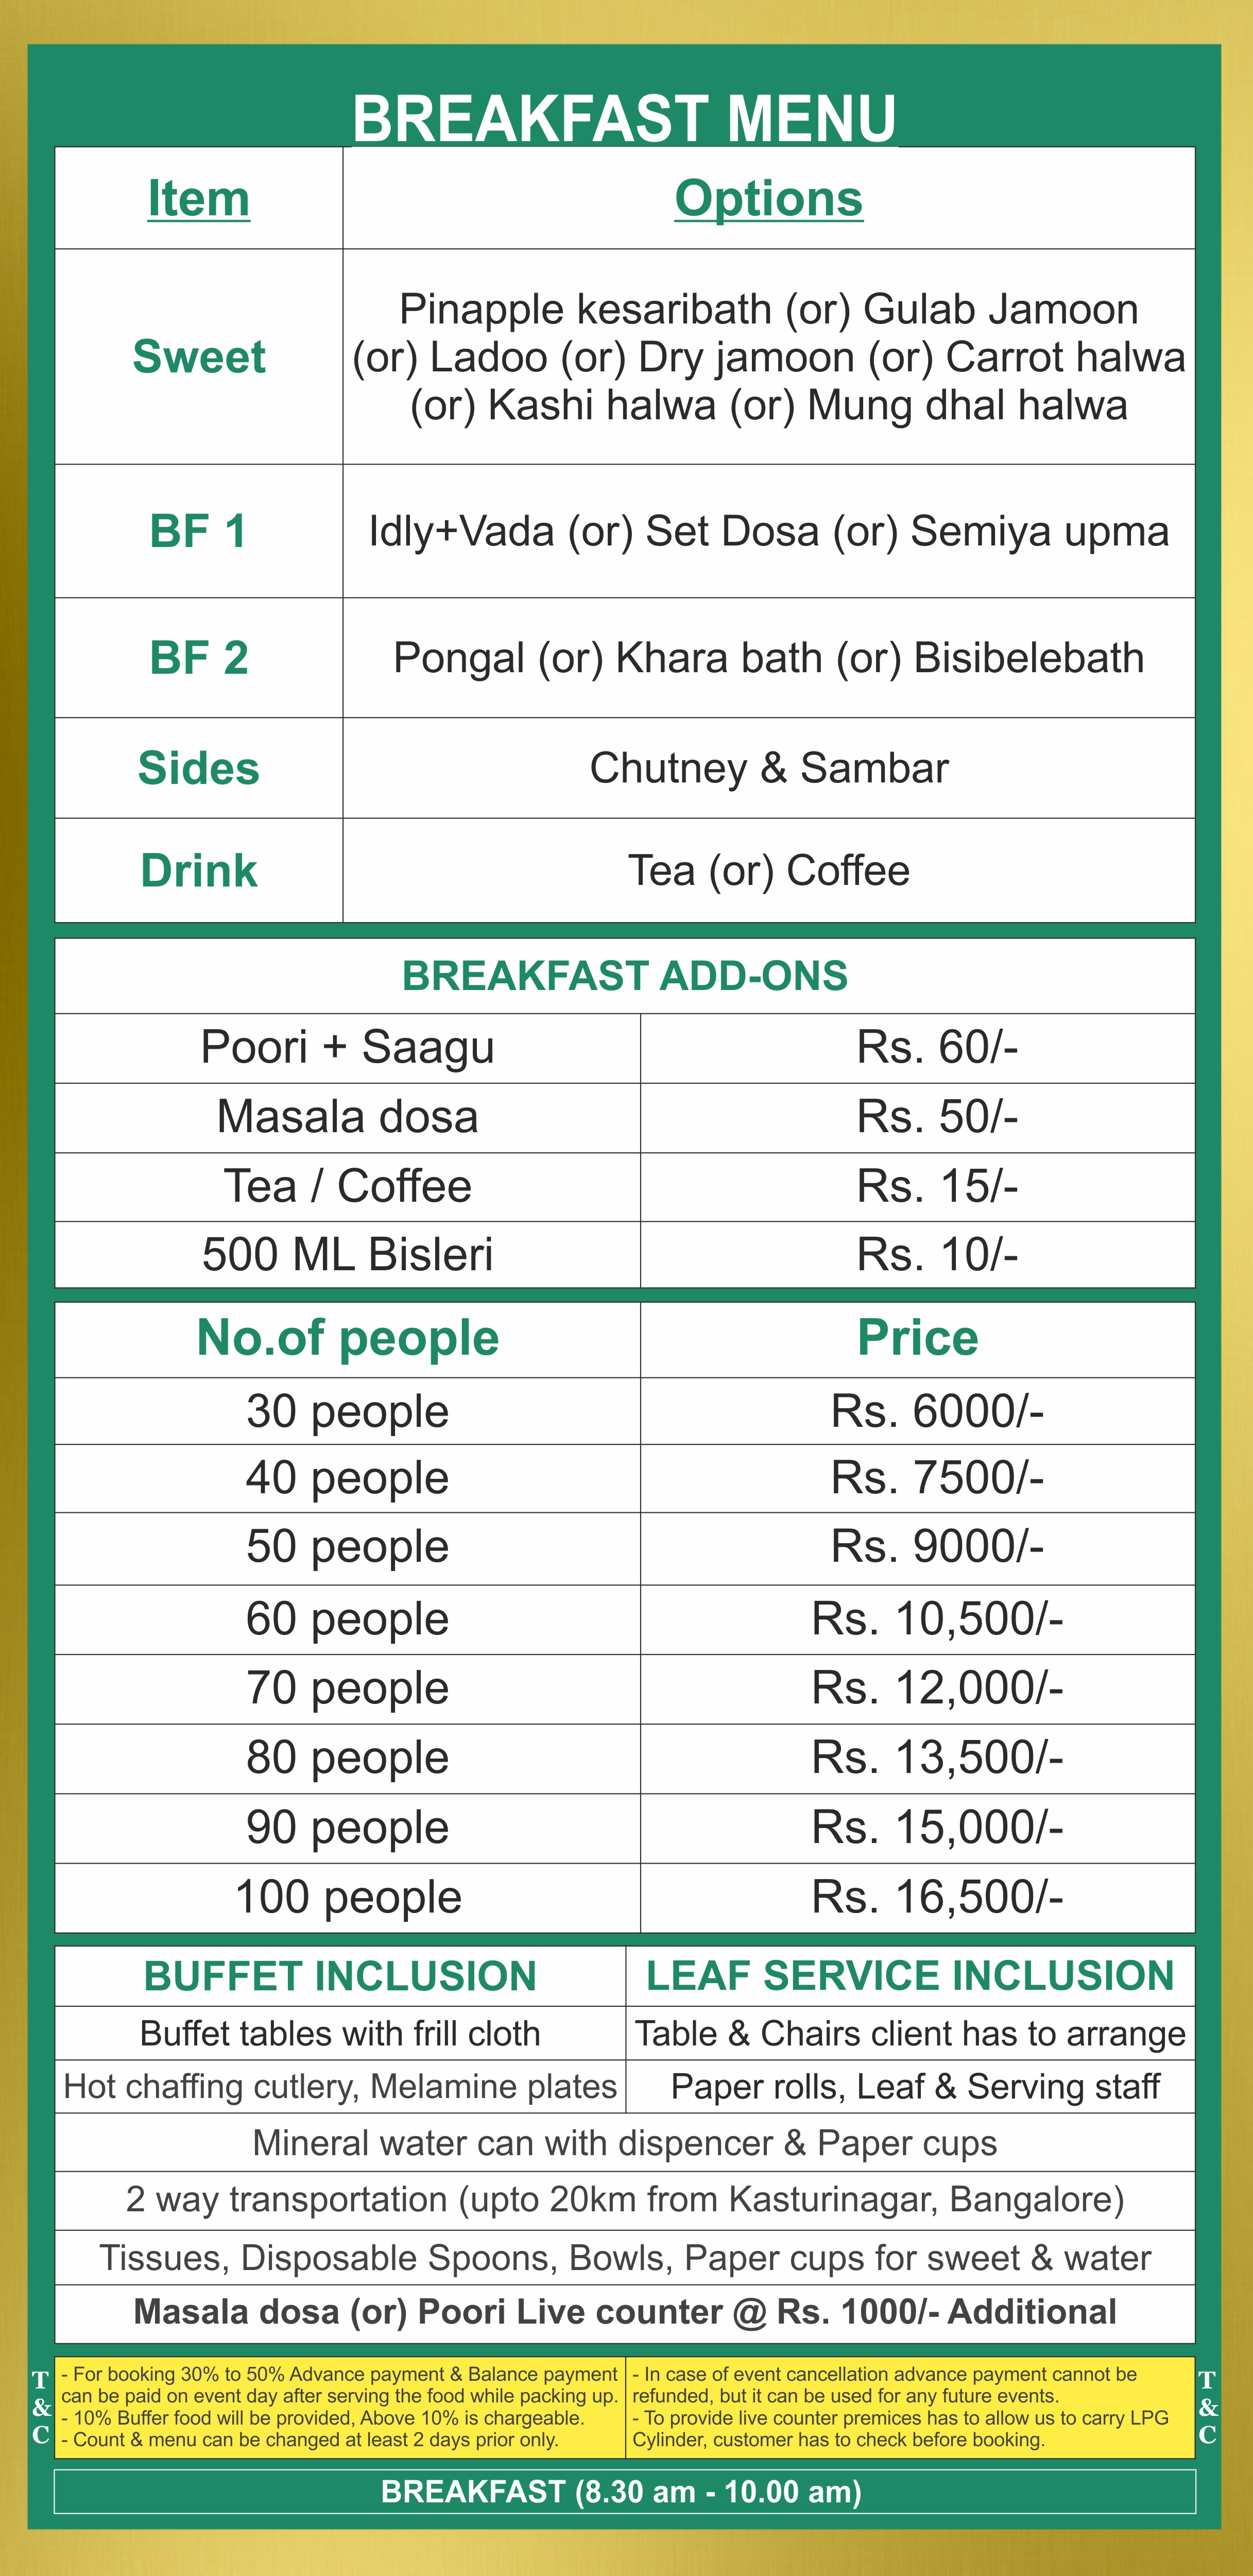 Breakfast catering Menu price list in Bangalore